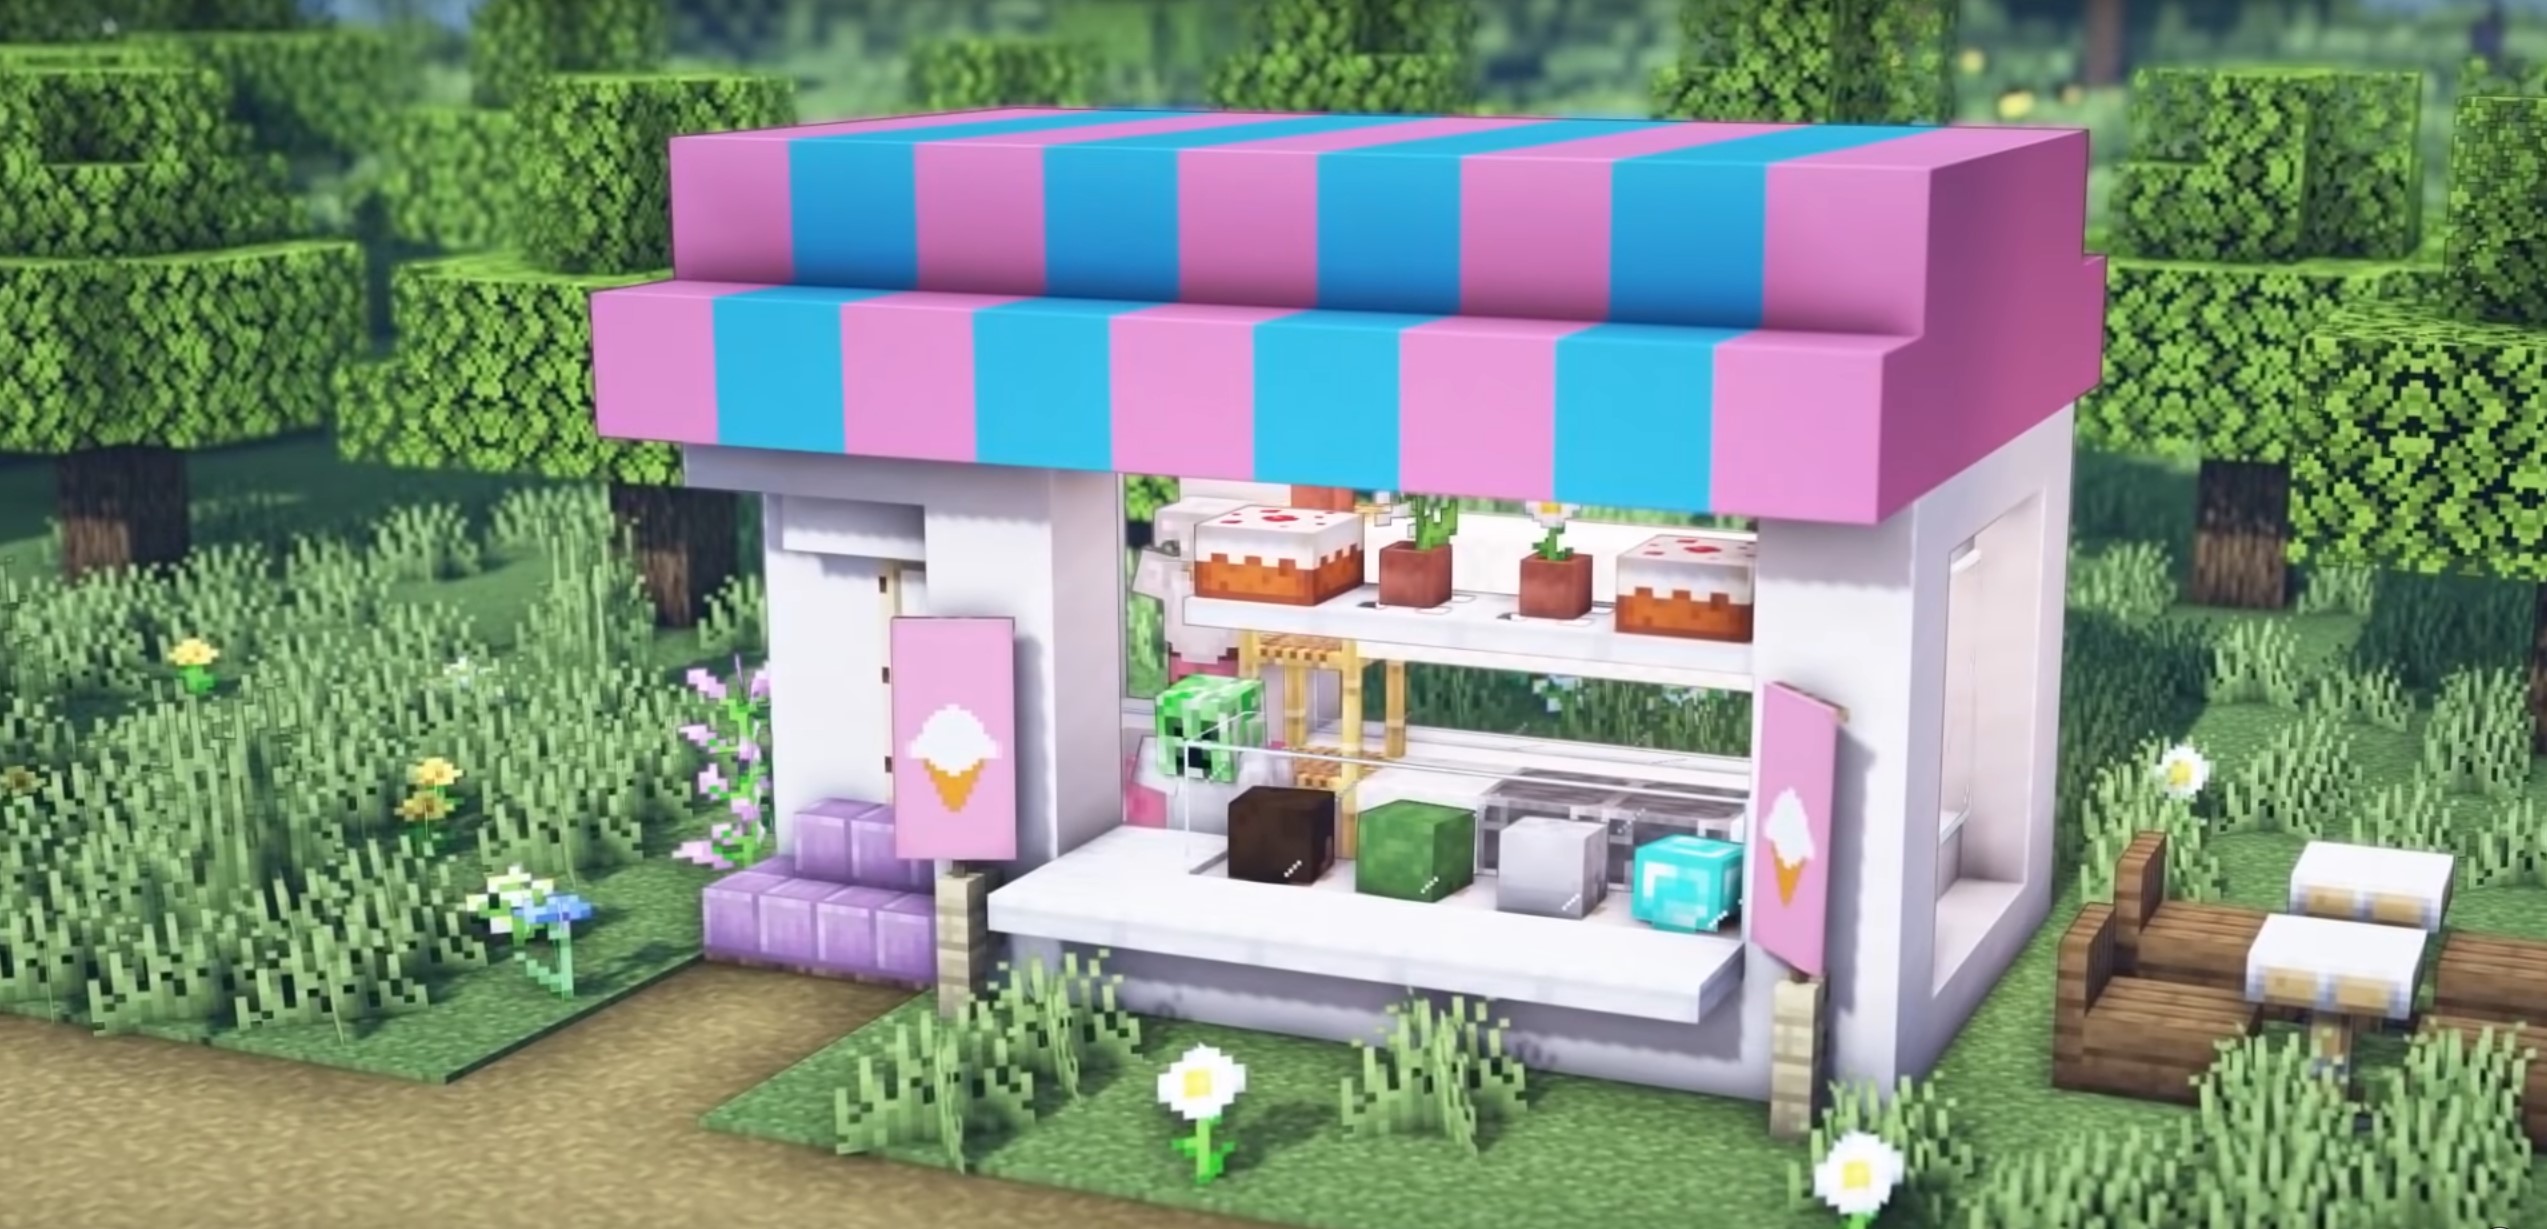 Minecraft Tiny Ice Cream Shop idea